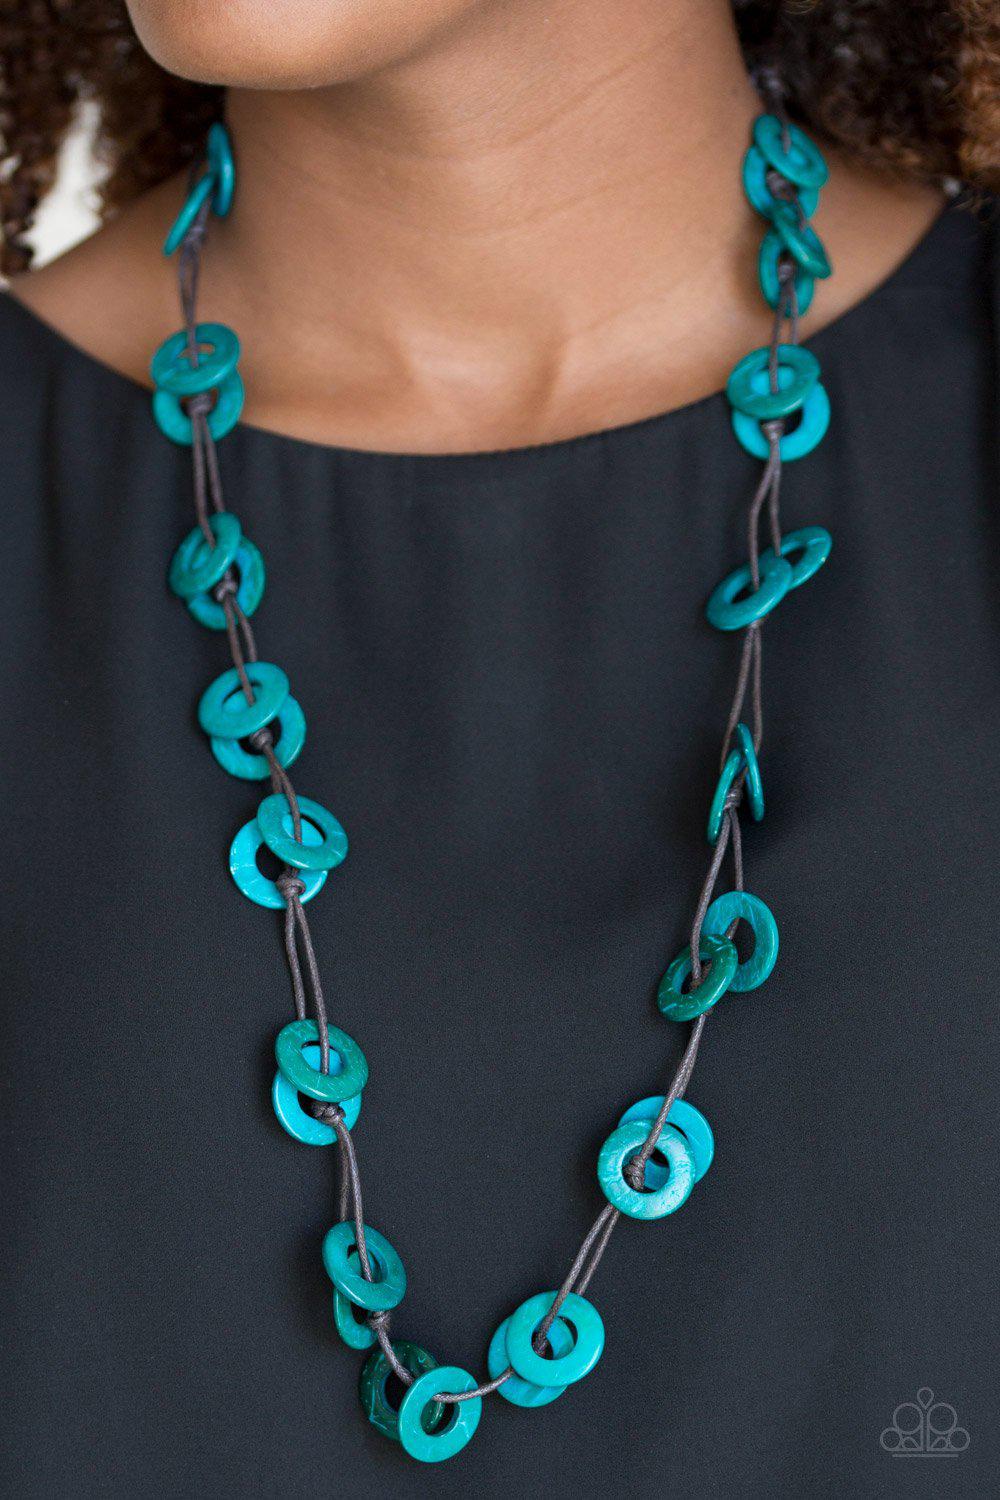 Waikiki Winds Blue Wood Necklace - Paparazzi Accessories - lightbox -CarasShop.com - $5 Jewelry by Cara Jewels